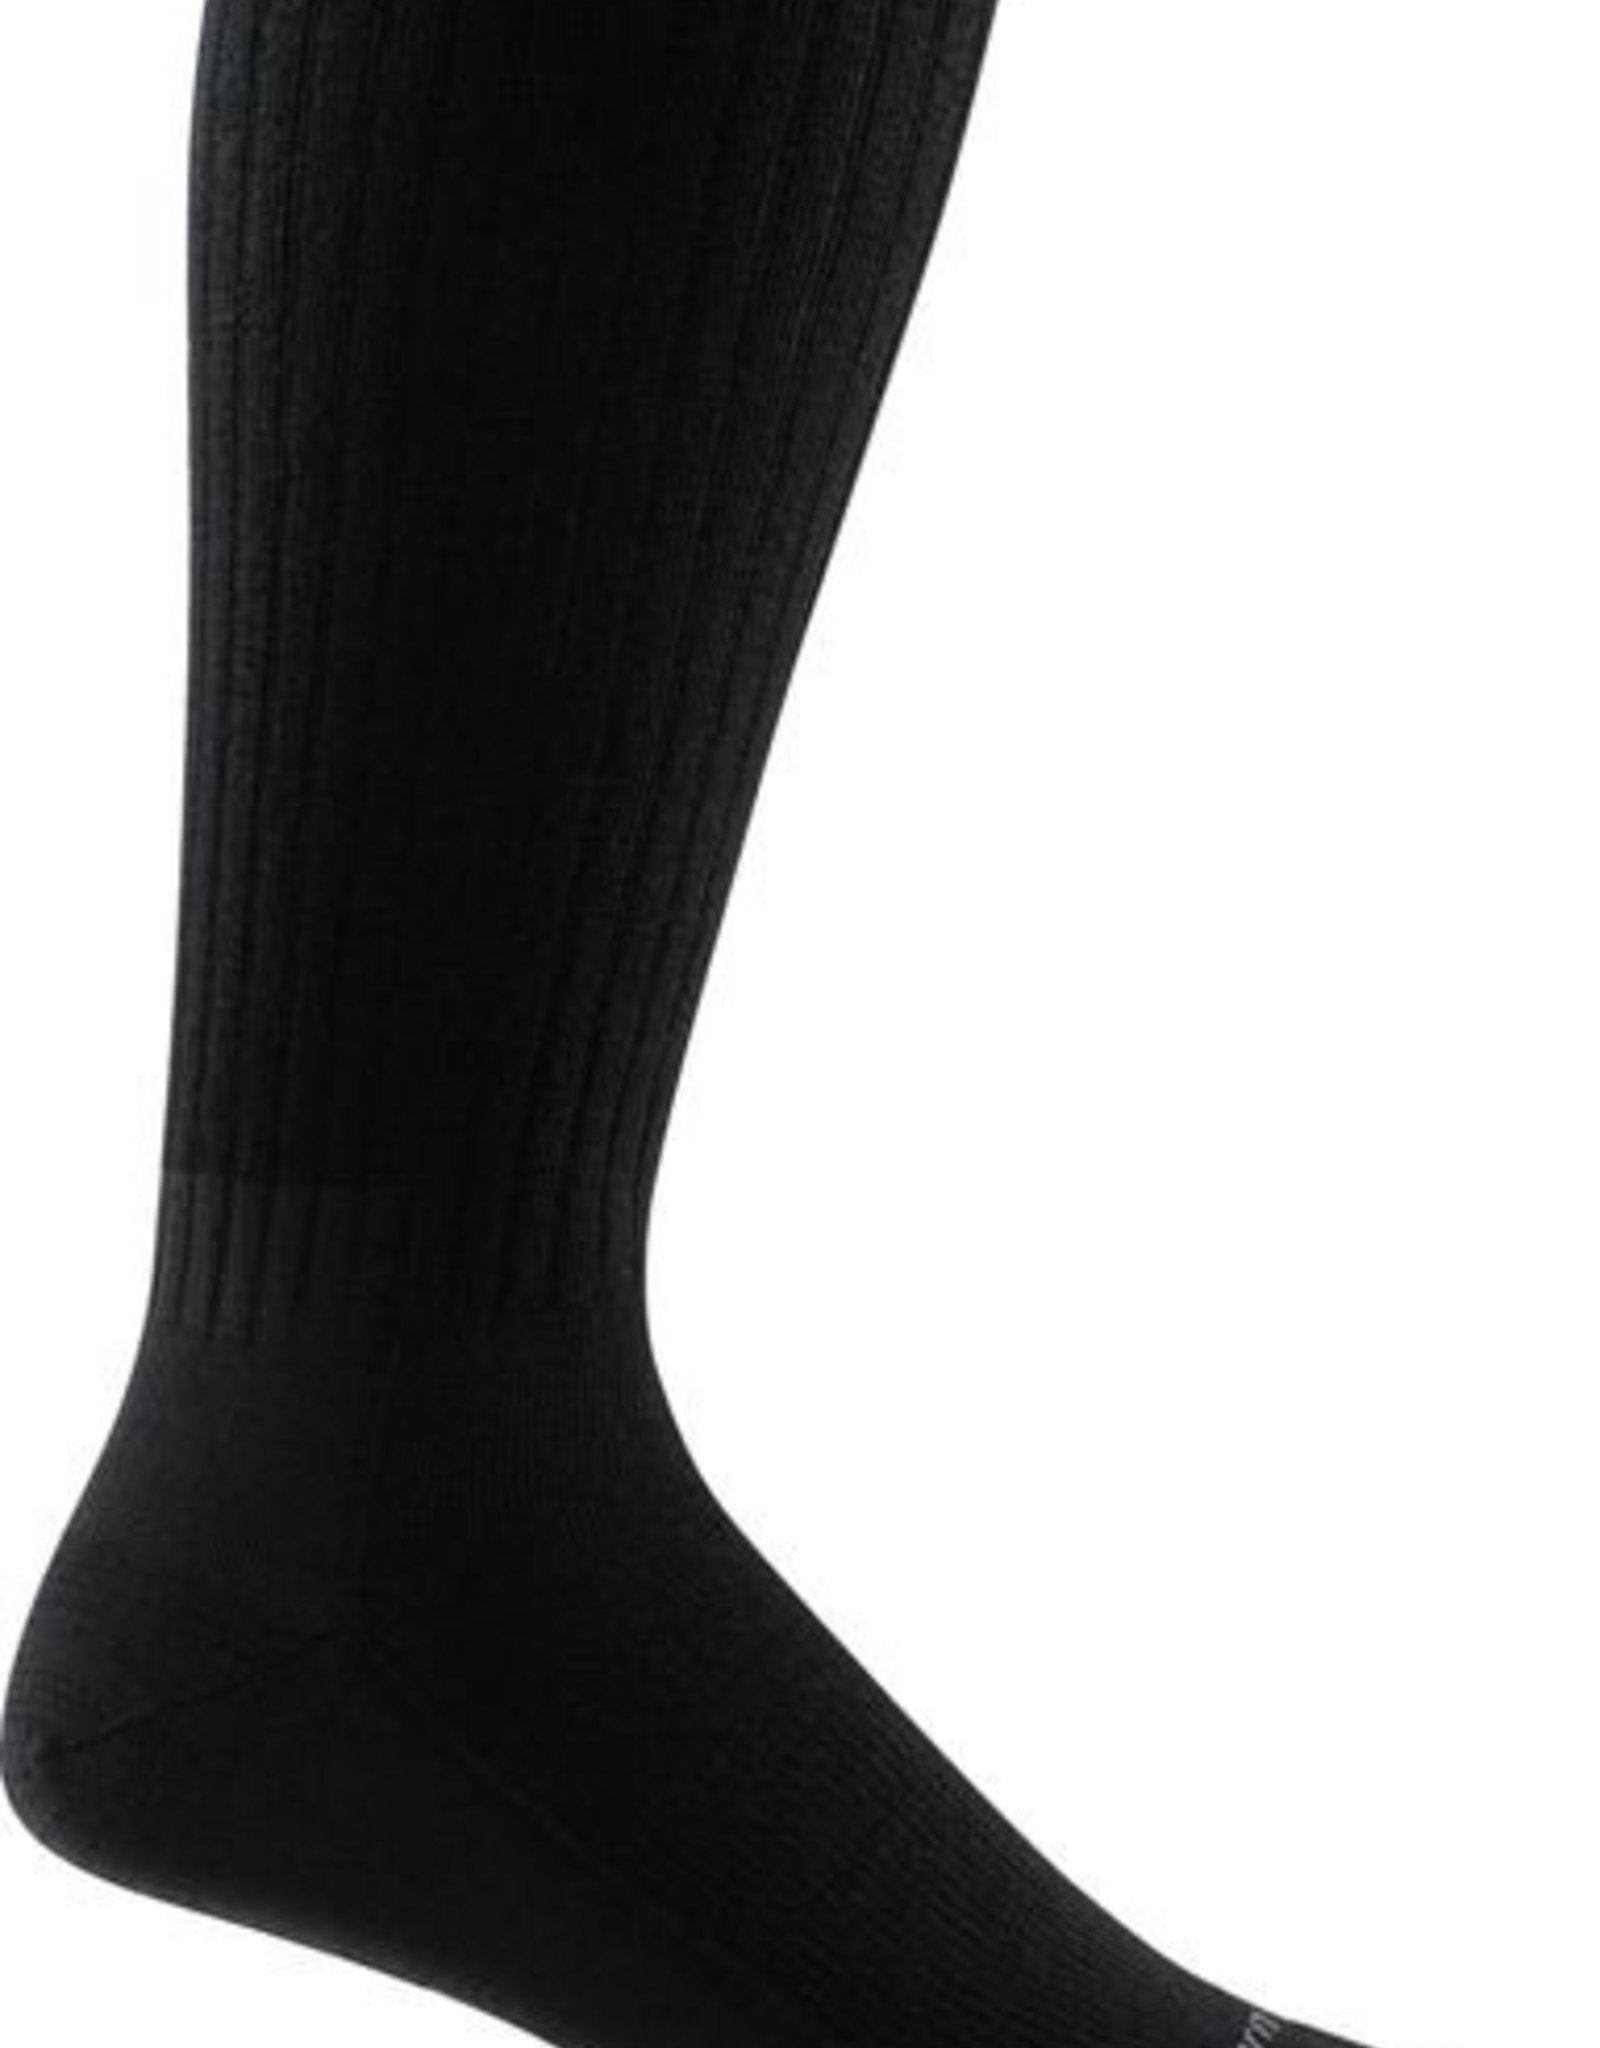 Darn Tough Darn Tough Men's Mid Calf Light Cushion Sock - Style 1474 - Black